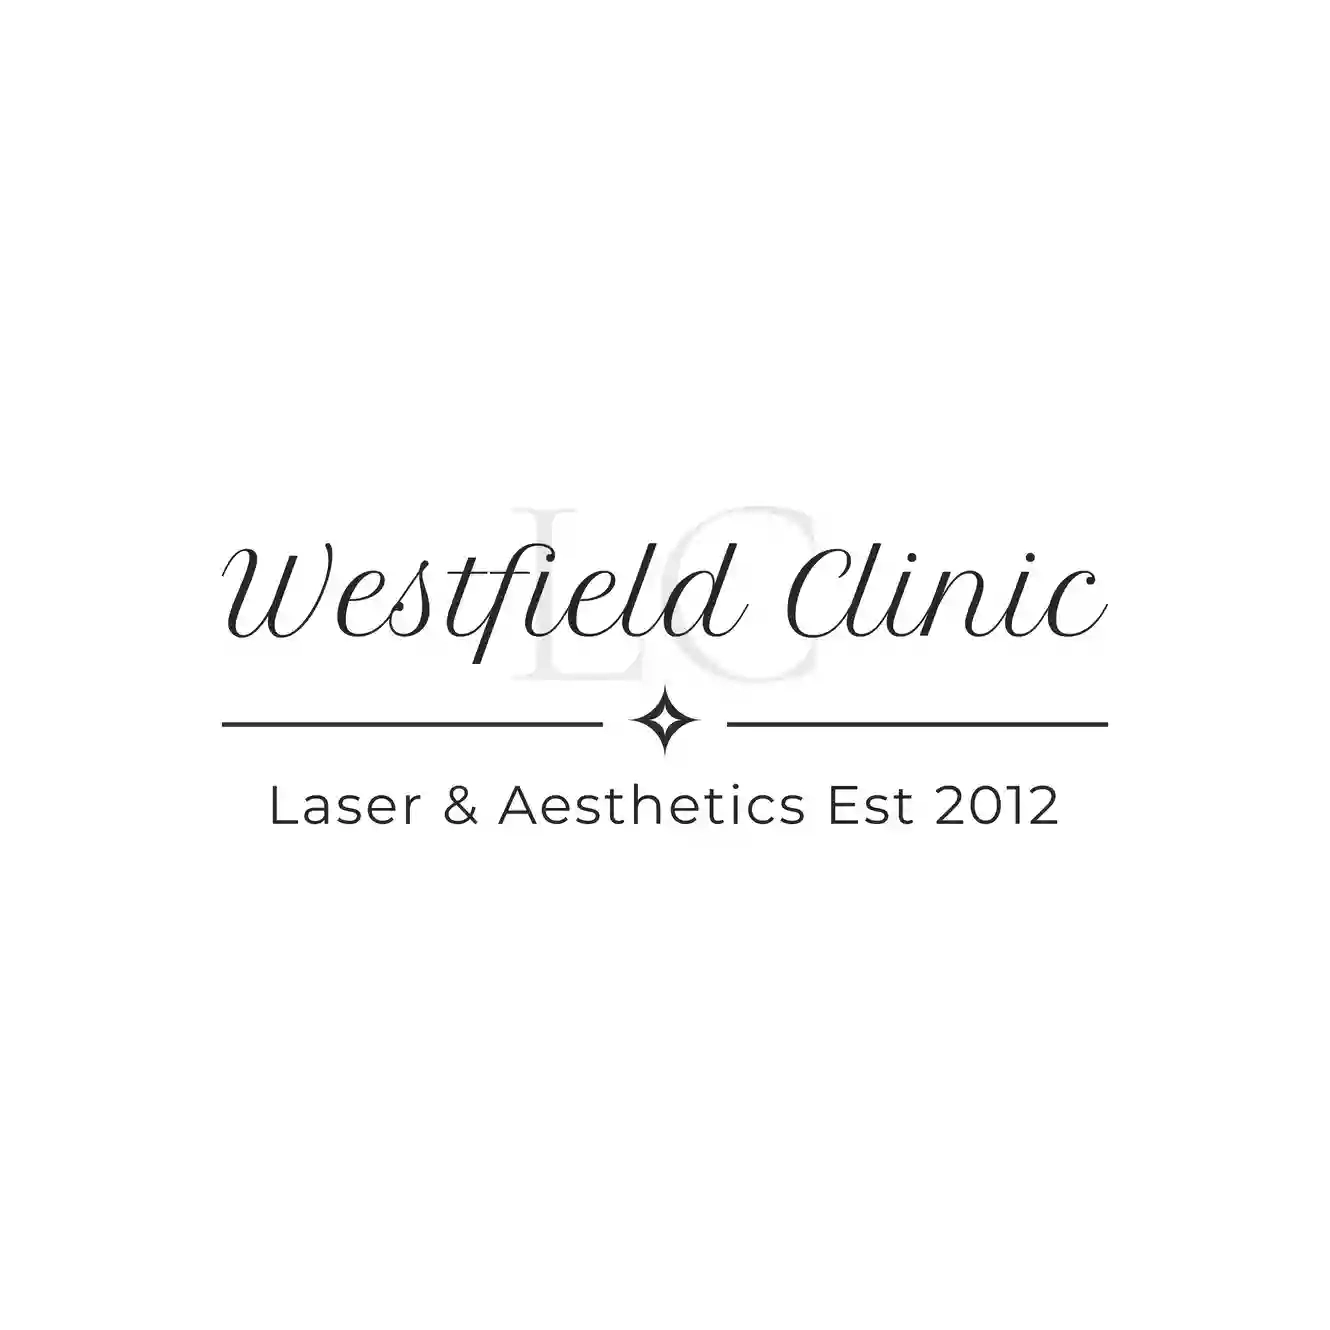 Westfield Clinic - Laser & Aesthetics